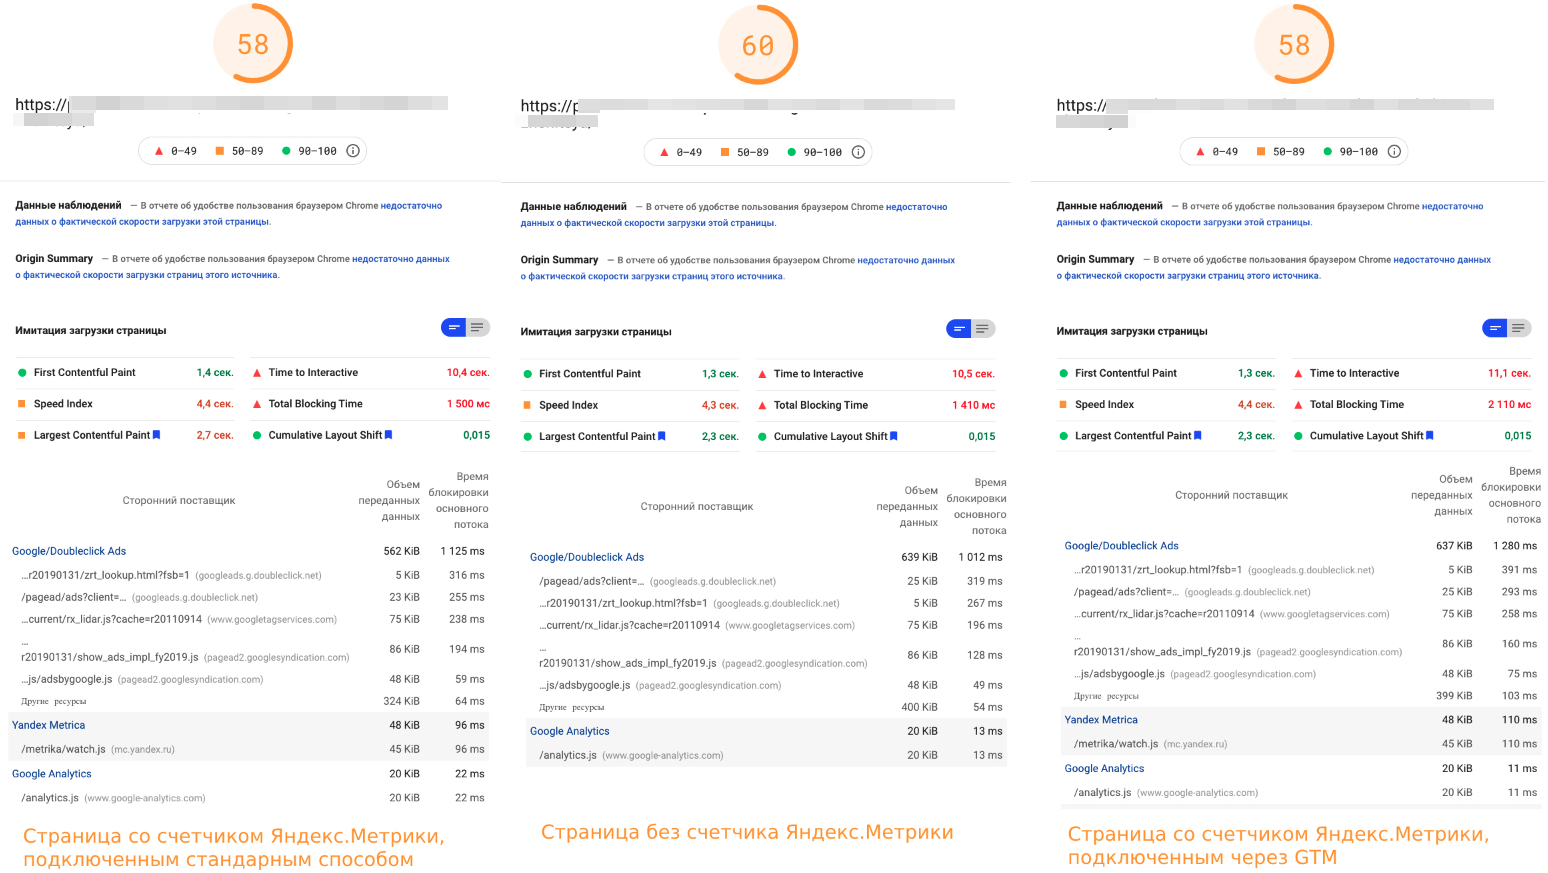 сравнение скорости загрузки сайта по PageSpeed Insights